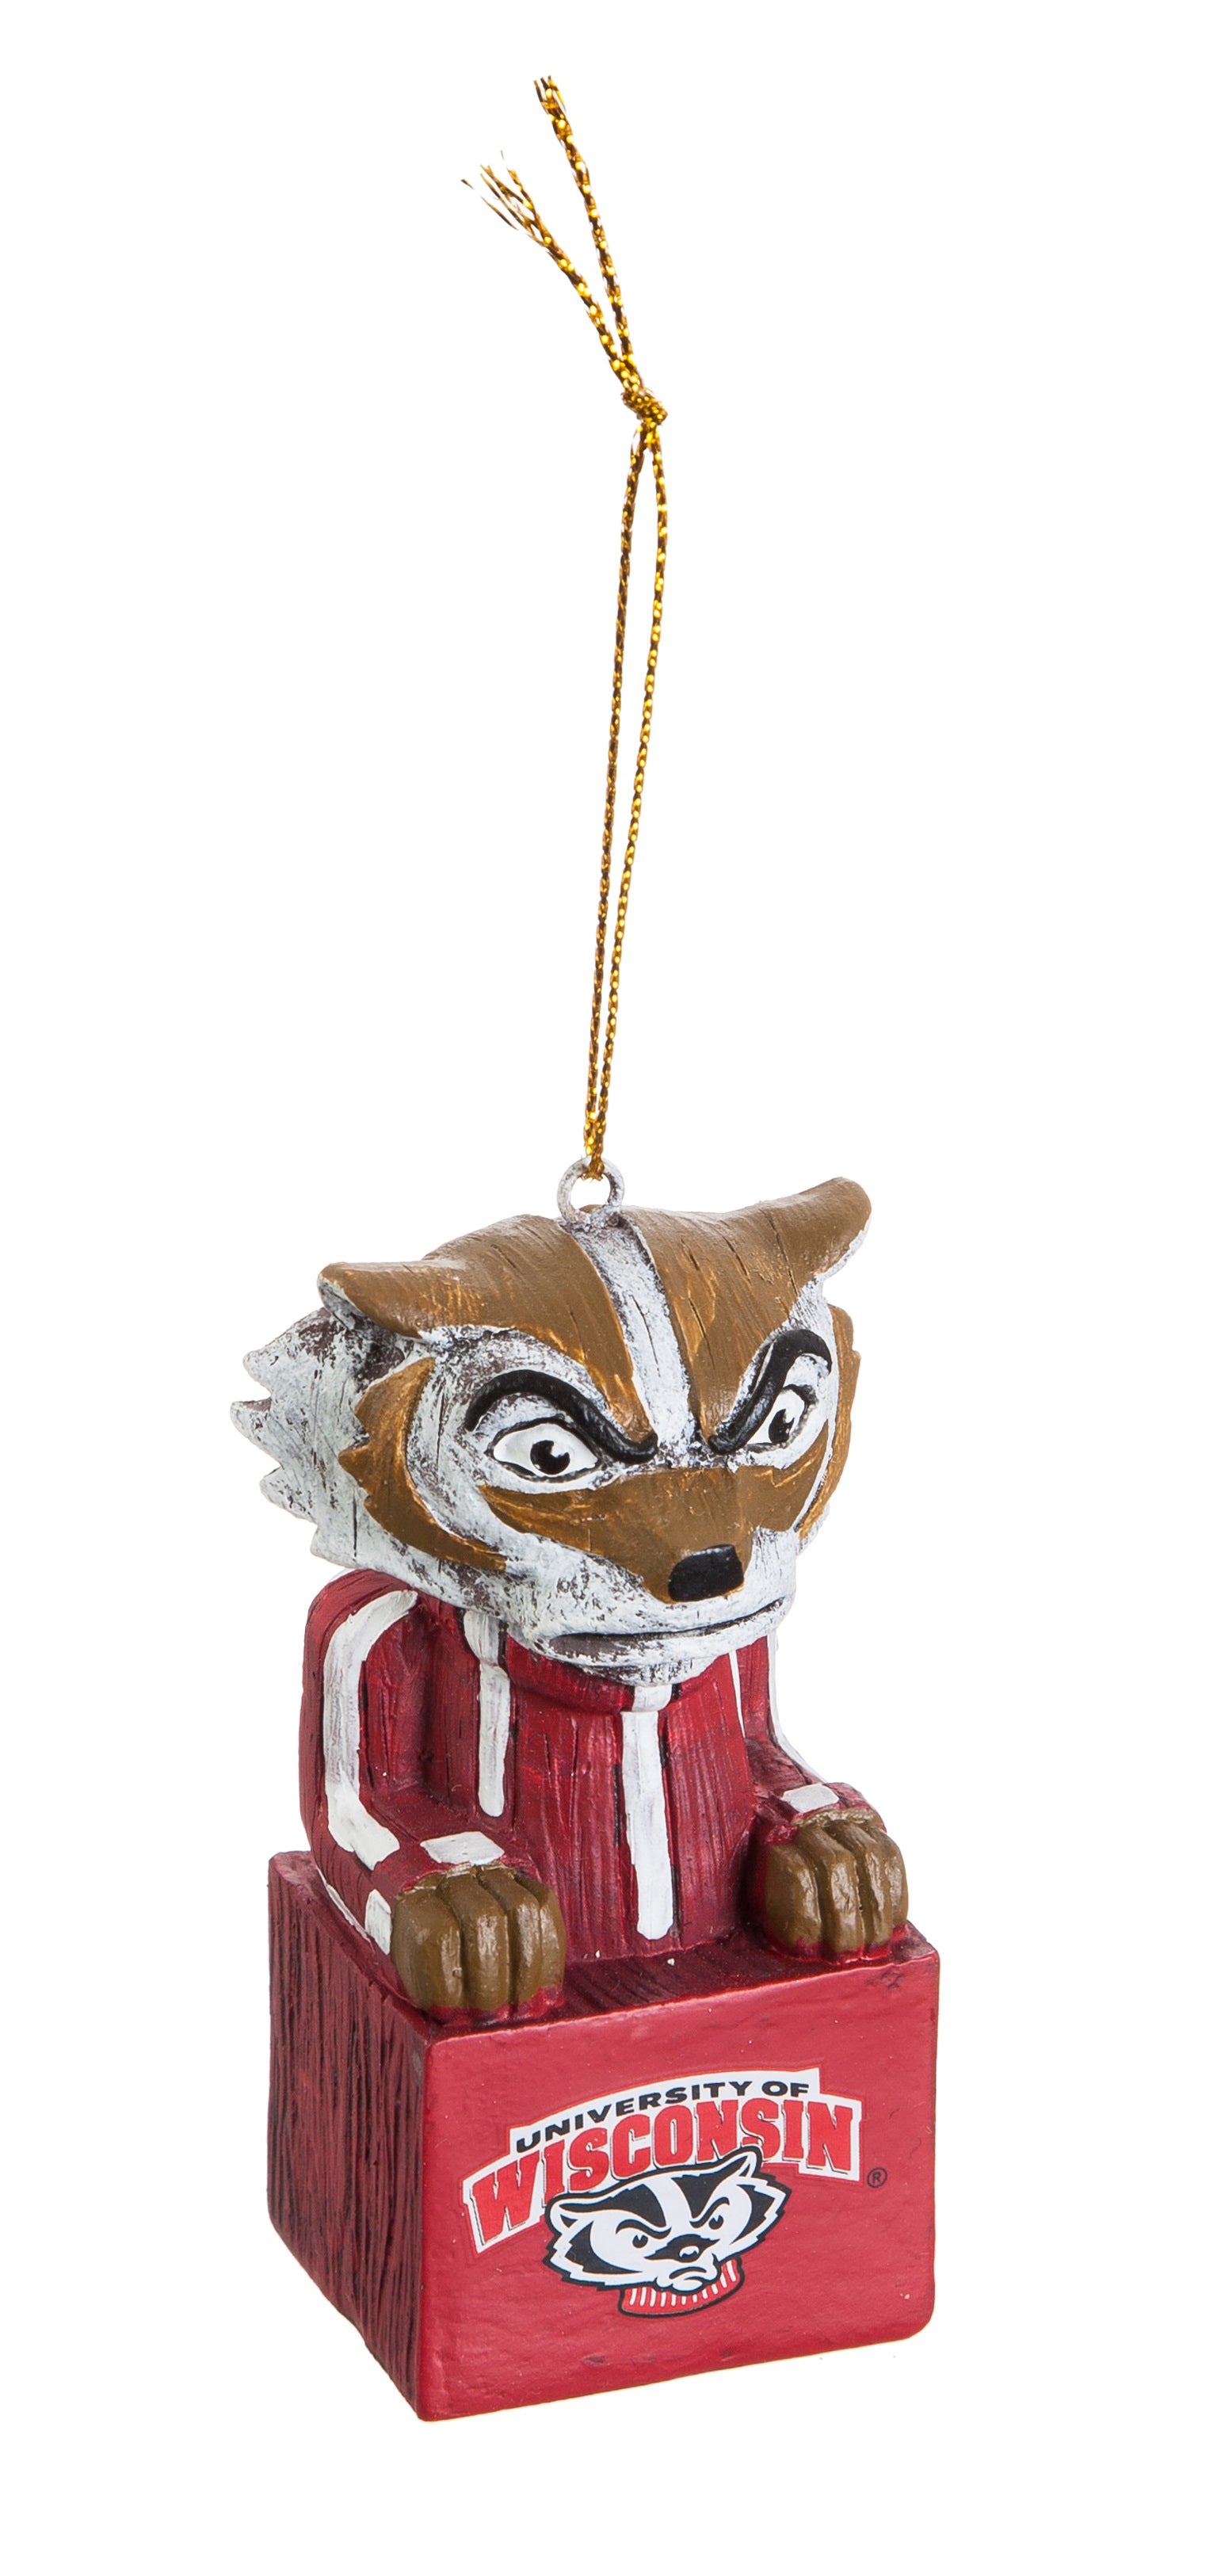 University of Wisconsin-Madison Mascot Ornament